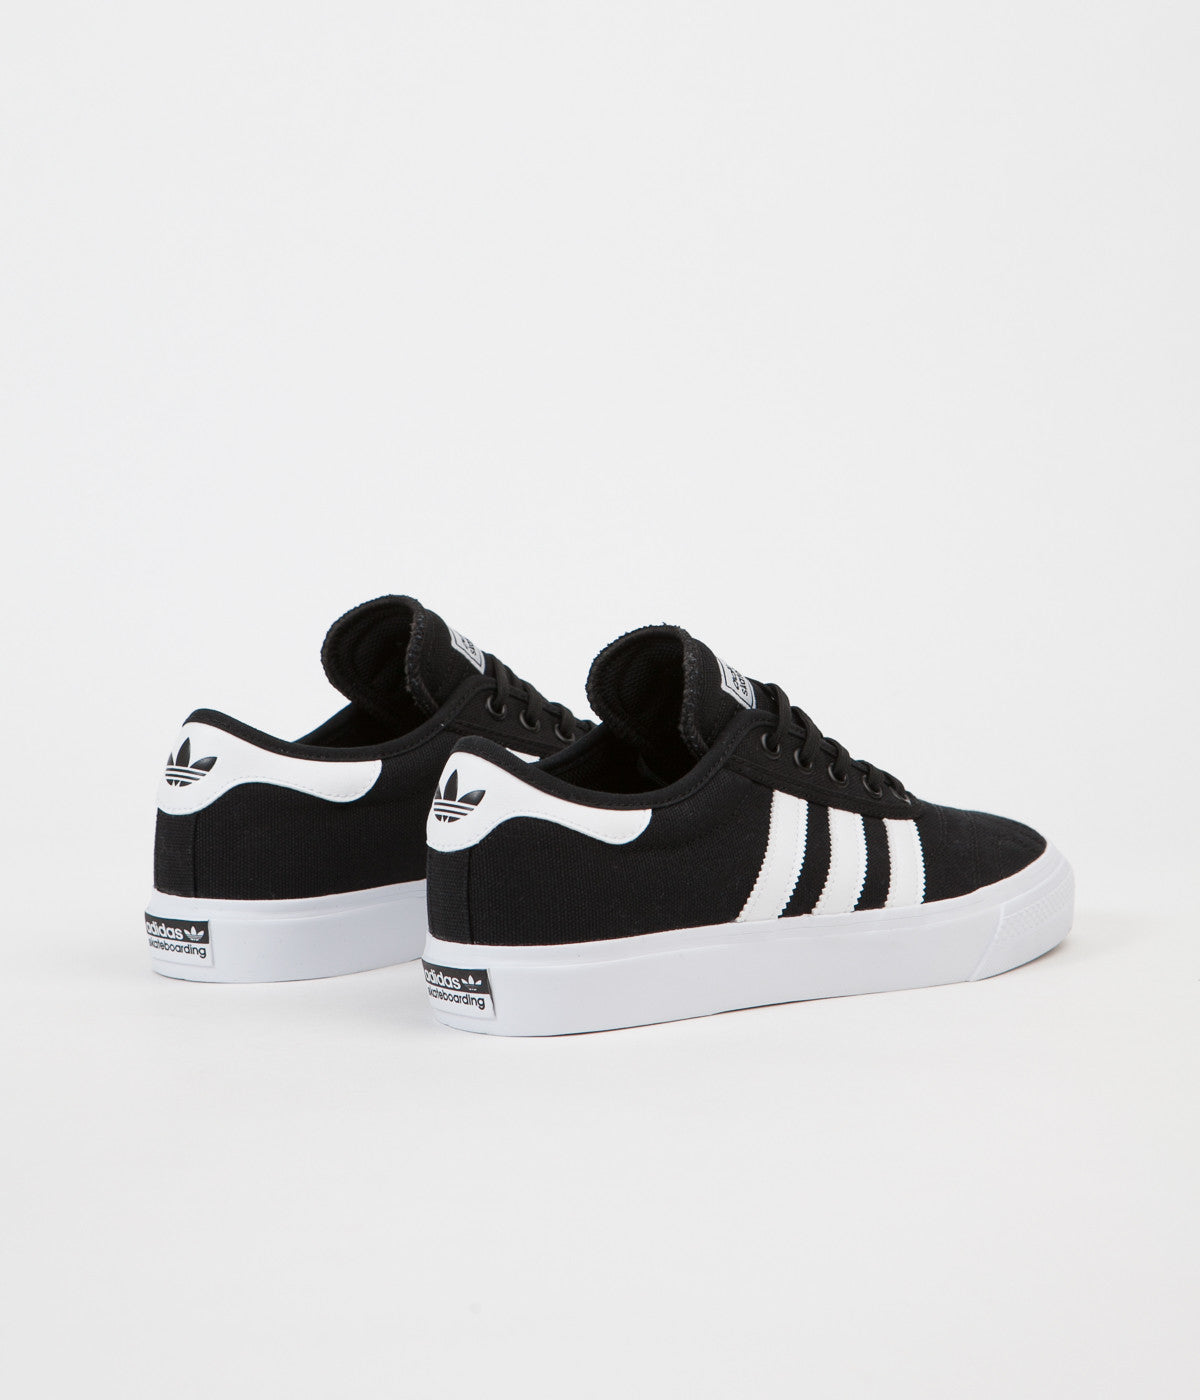 Adidas Adi-Ease Premiere Shoes - Core Black / White / Gum4 | Flatspot